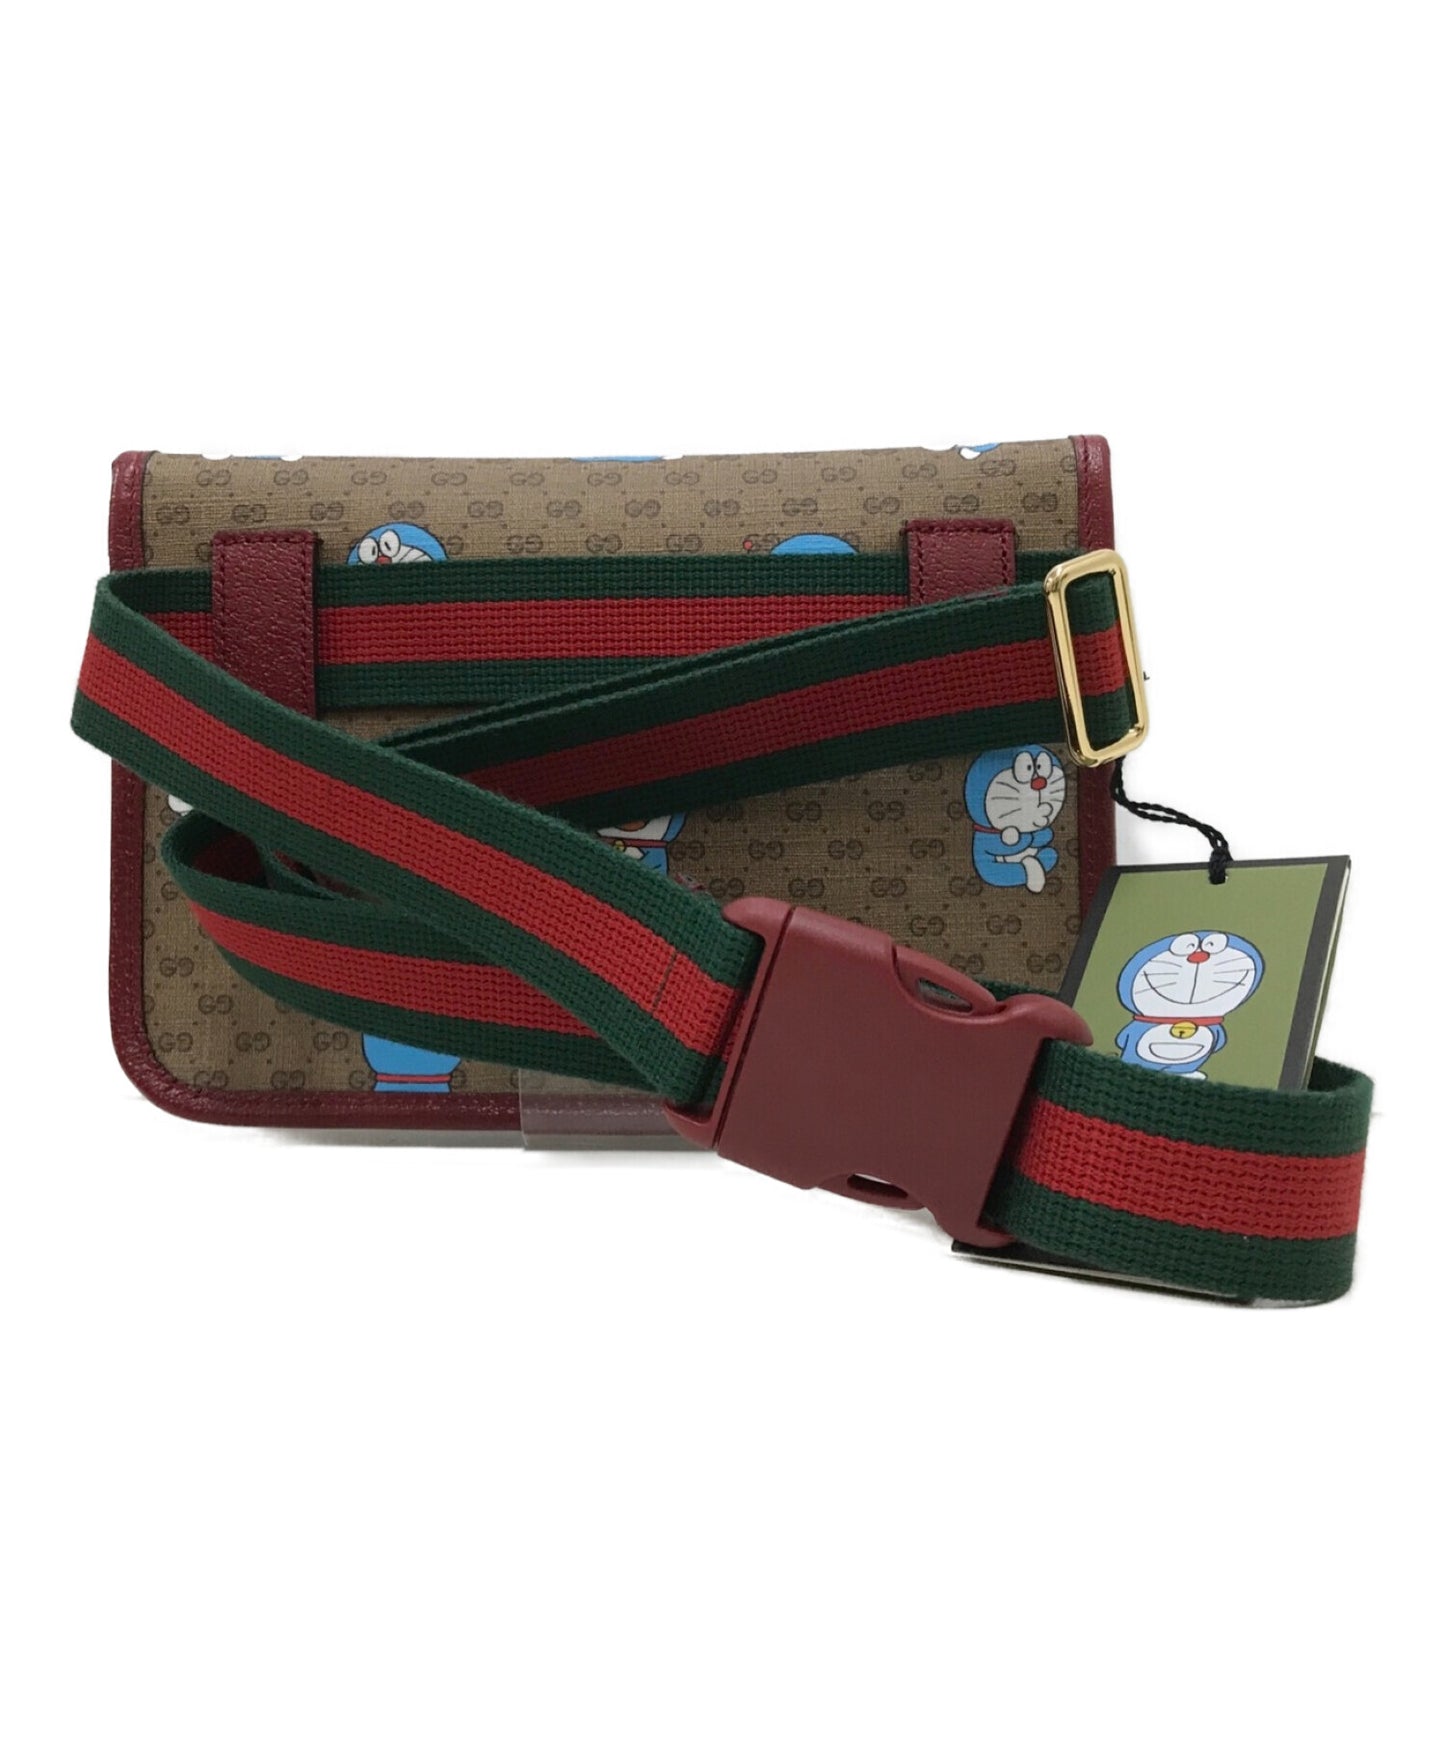 GUCCI x Doraemon belt bag 647817